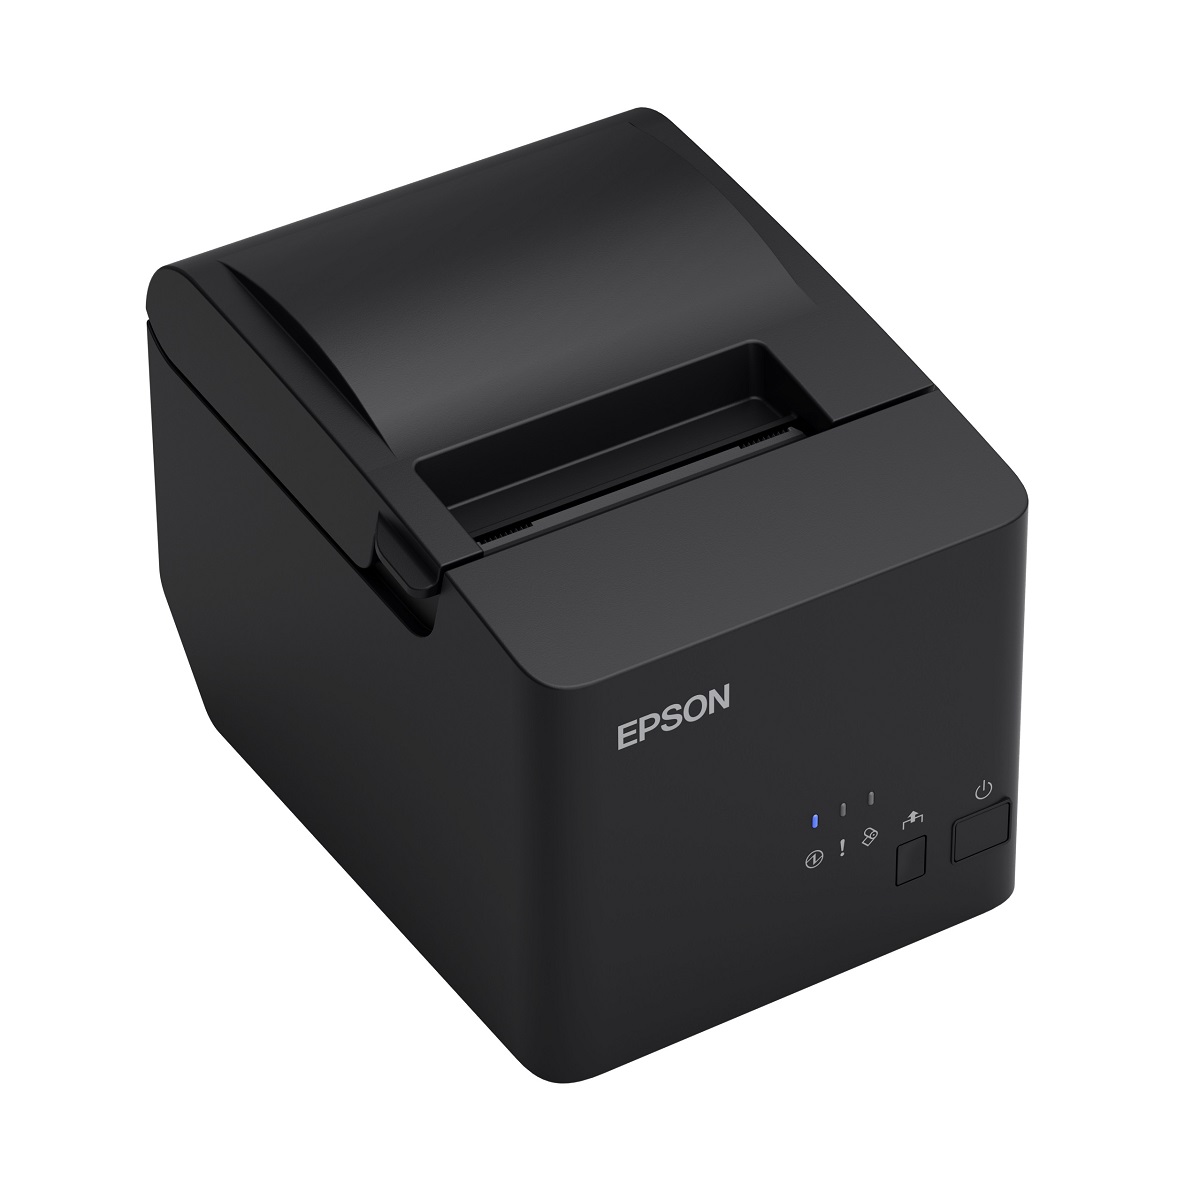 epson printer for windows 7 l380